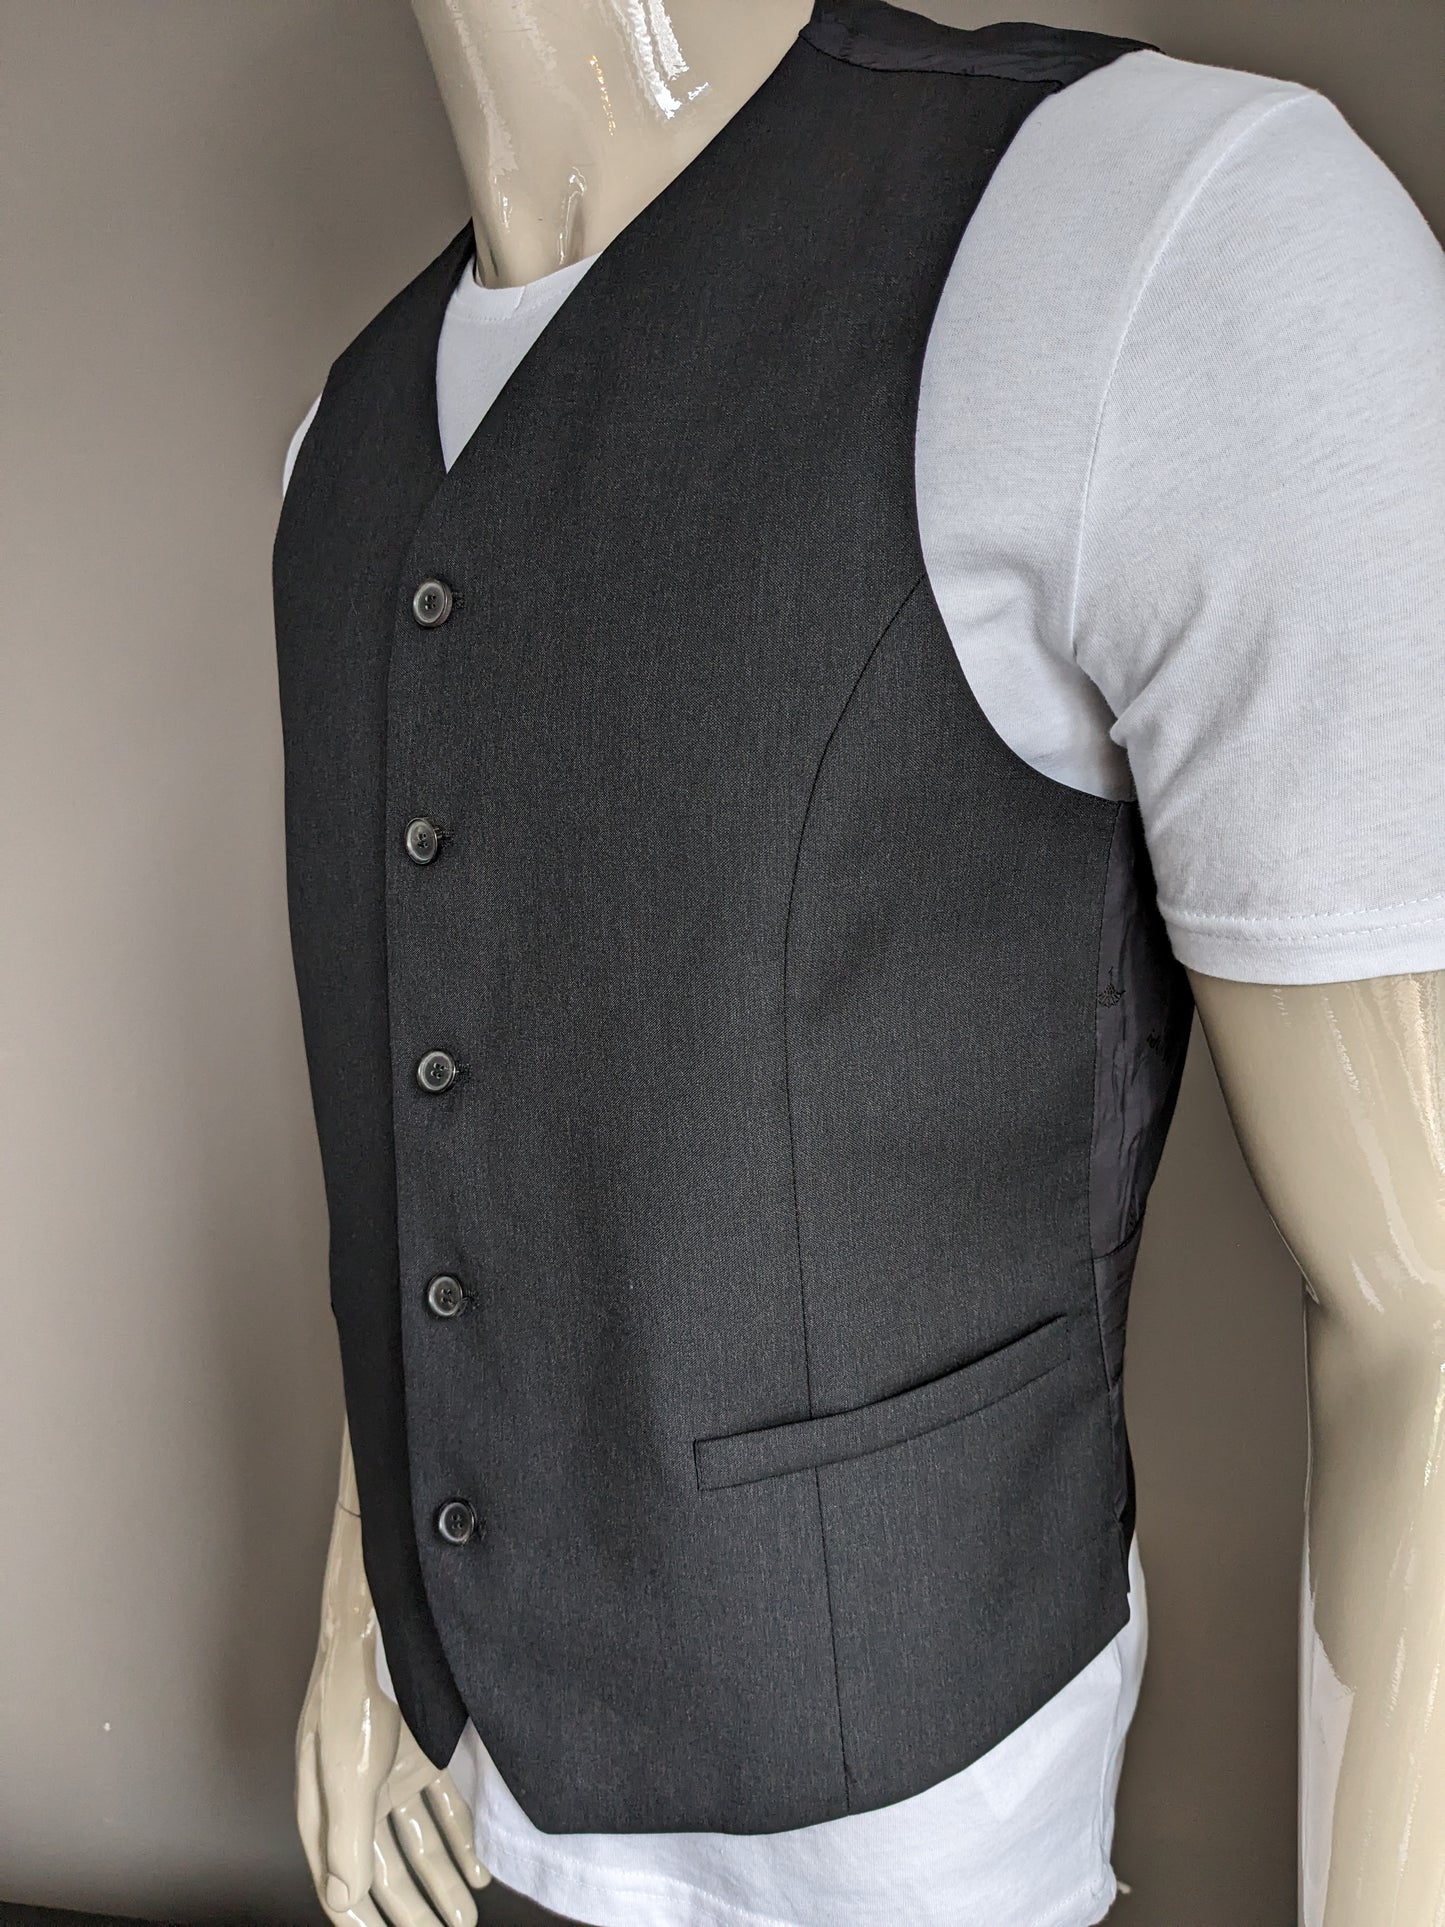 Joop! Waistcoat. Dark gray colored. Size M / L. #332.